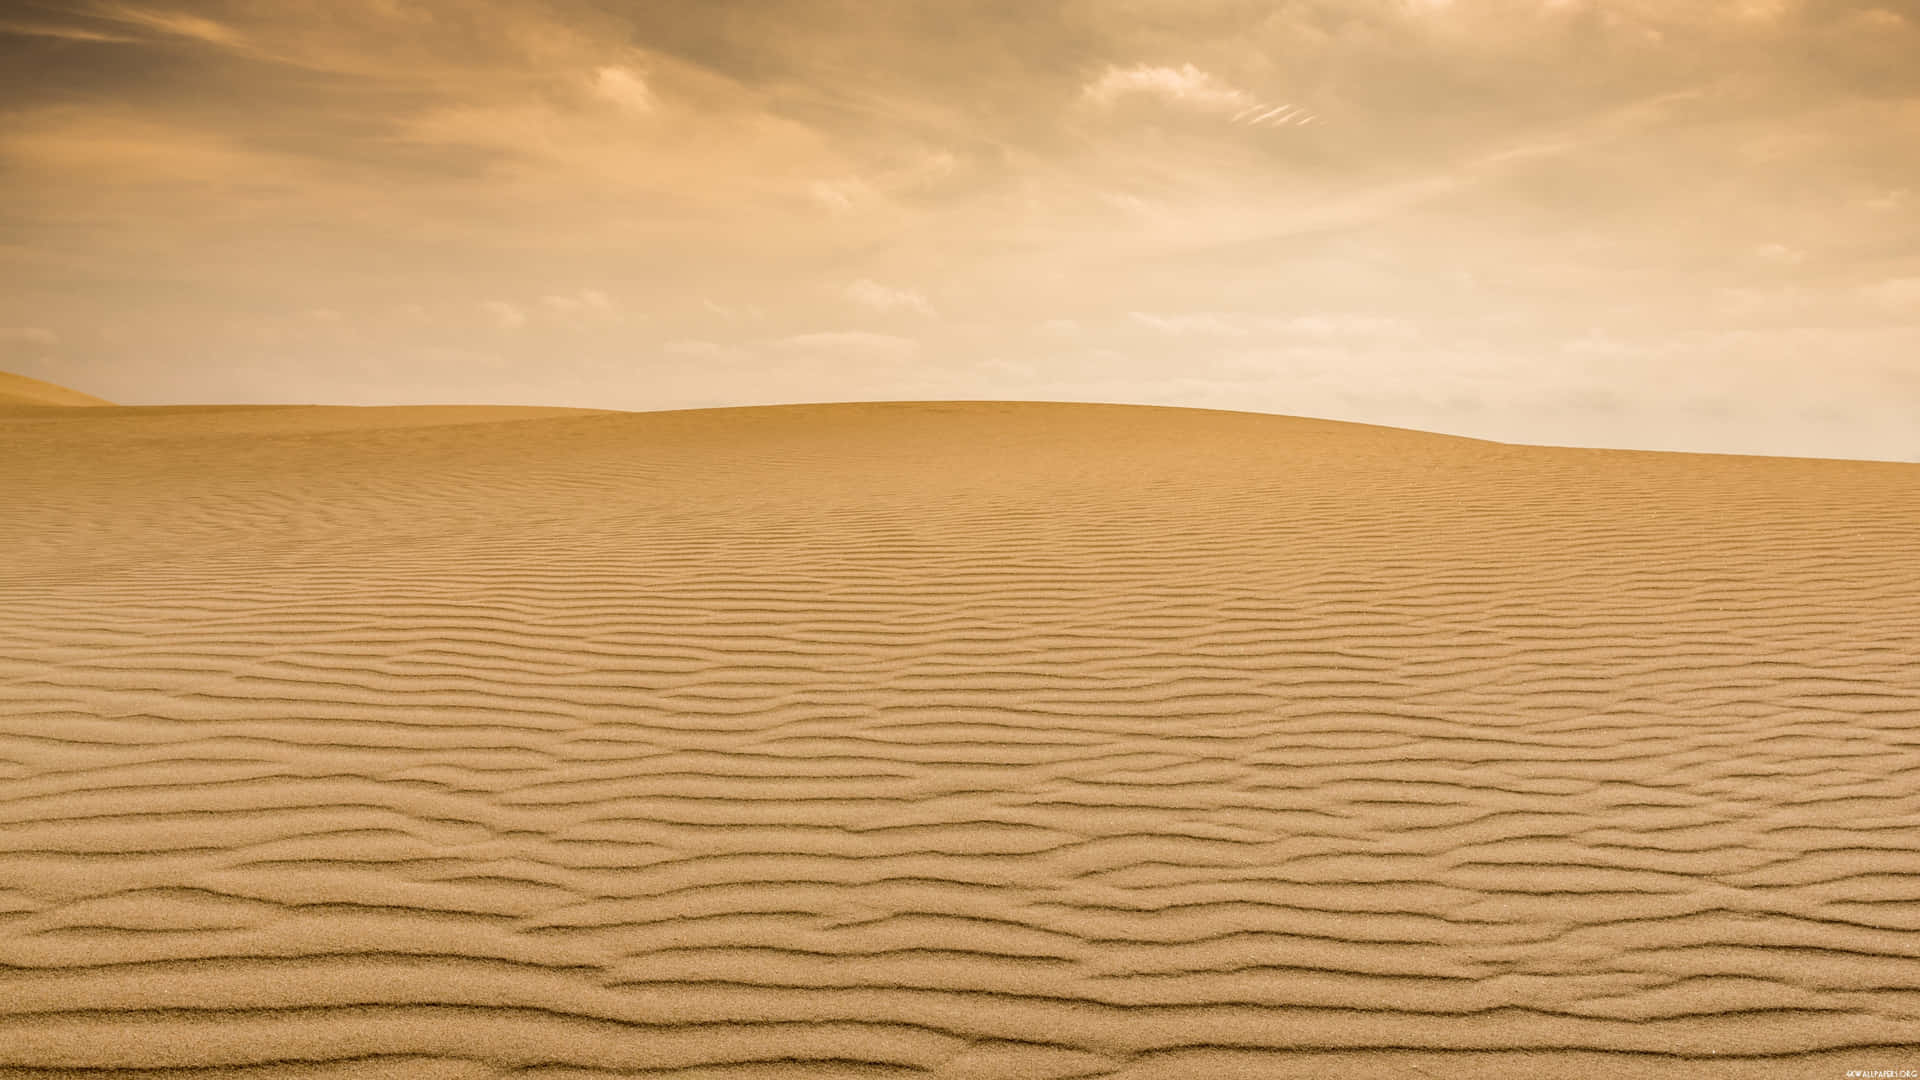 Saharawüstensand Horizont Wallpaper